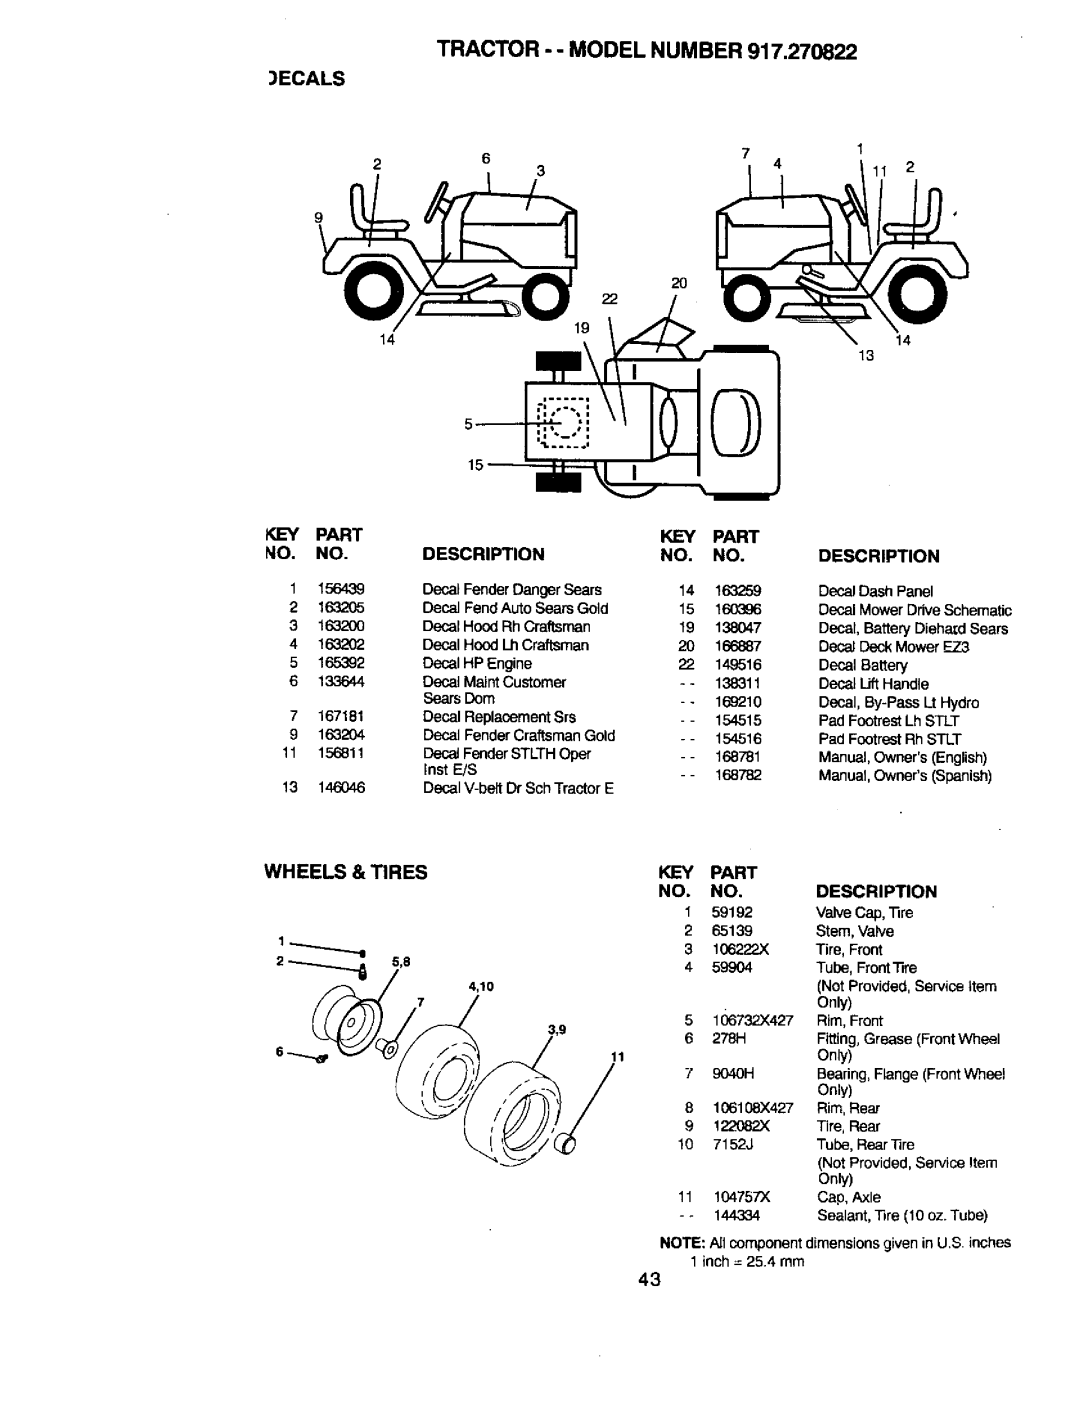 Craftsman 917.270822 owner manual _Ecals, Tractor - - Model Number 